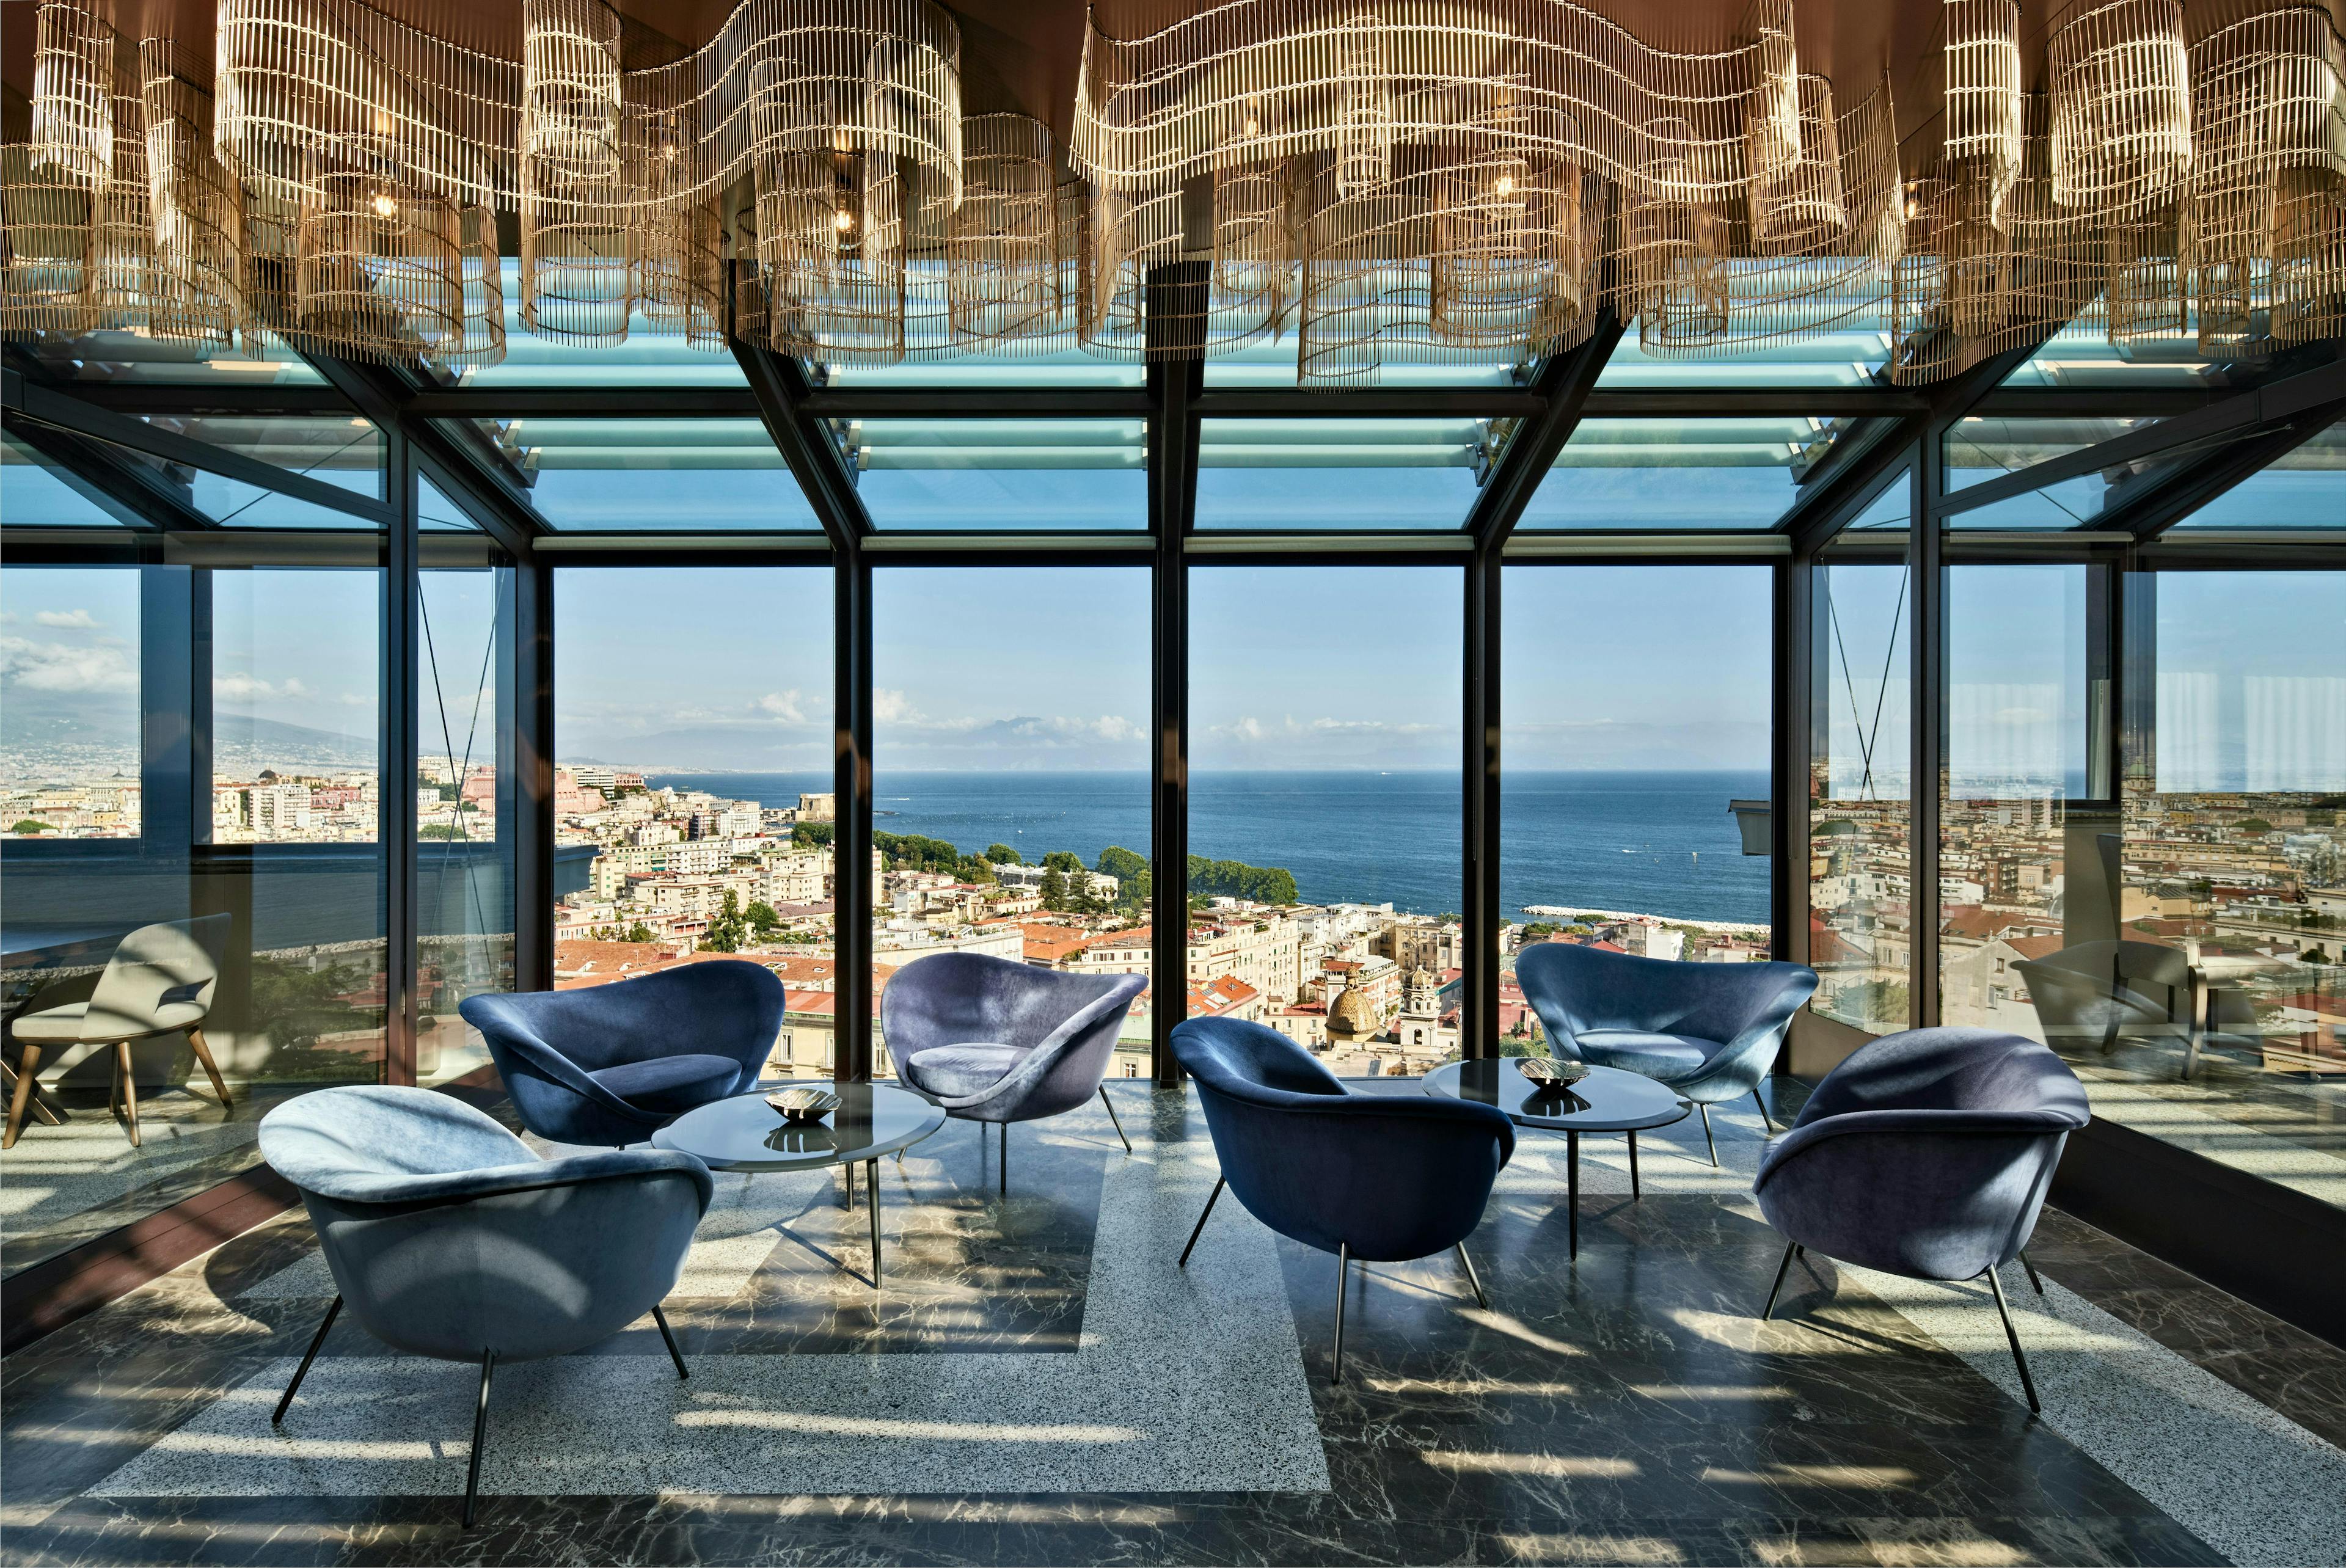 curio britannique hilton pastrovicchio architecture building furniture indoors lounge chair desk table